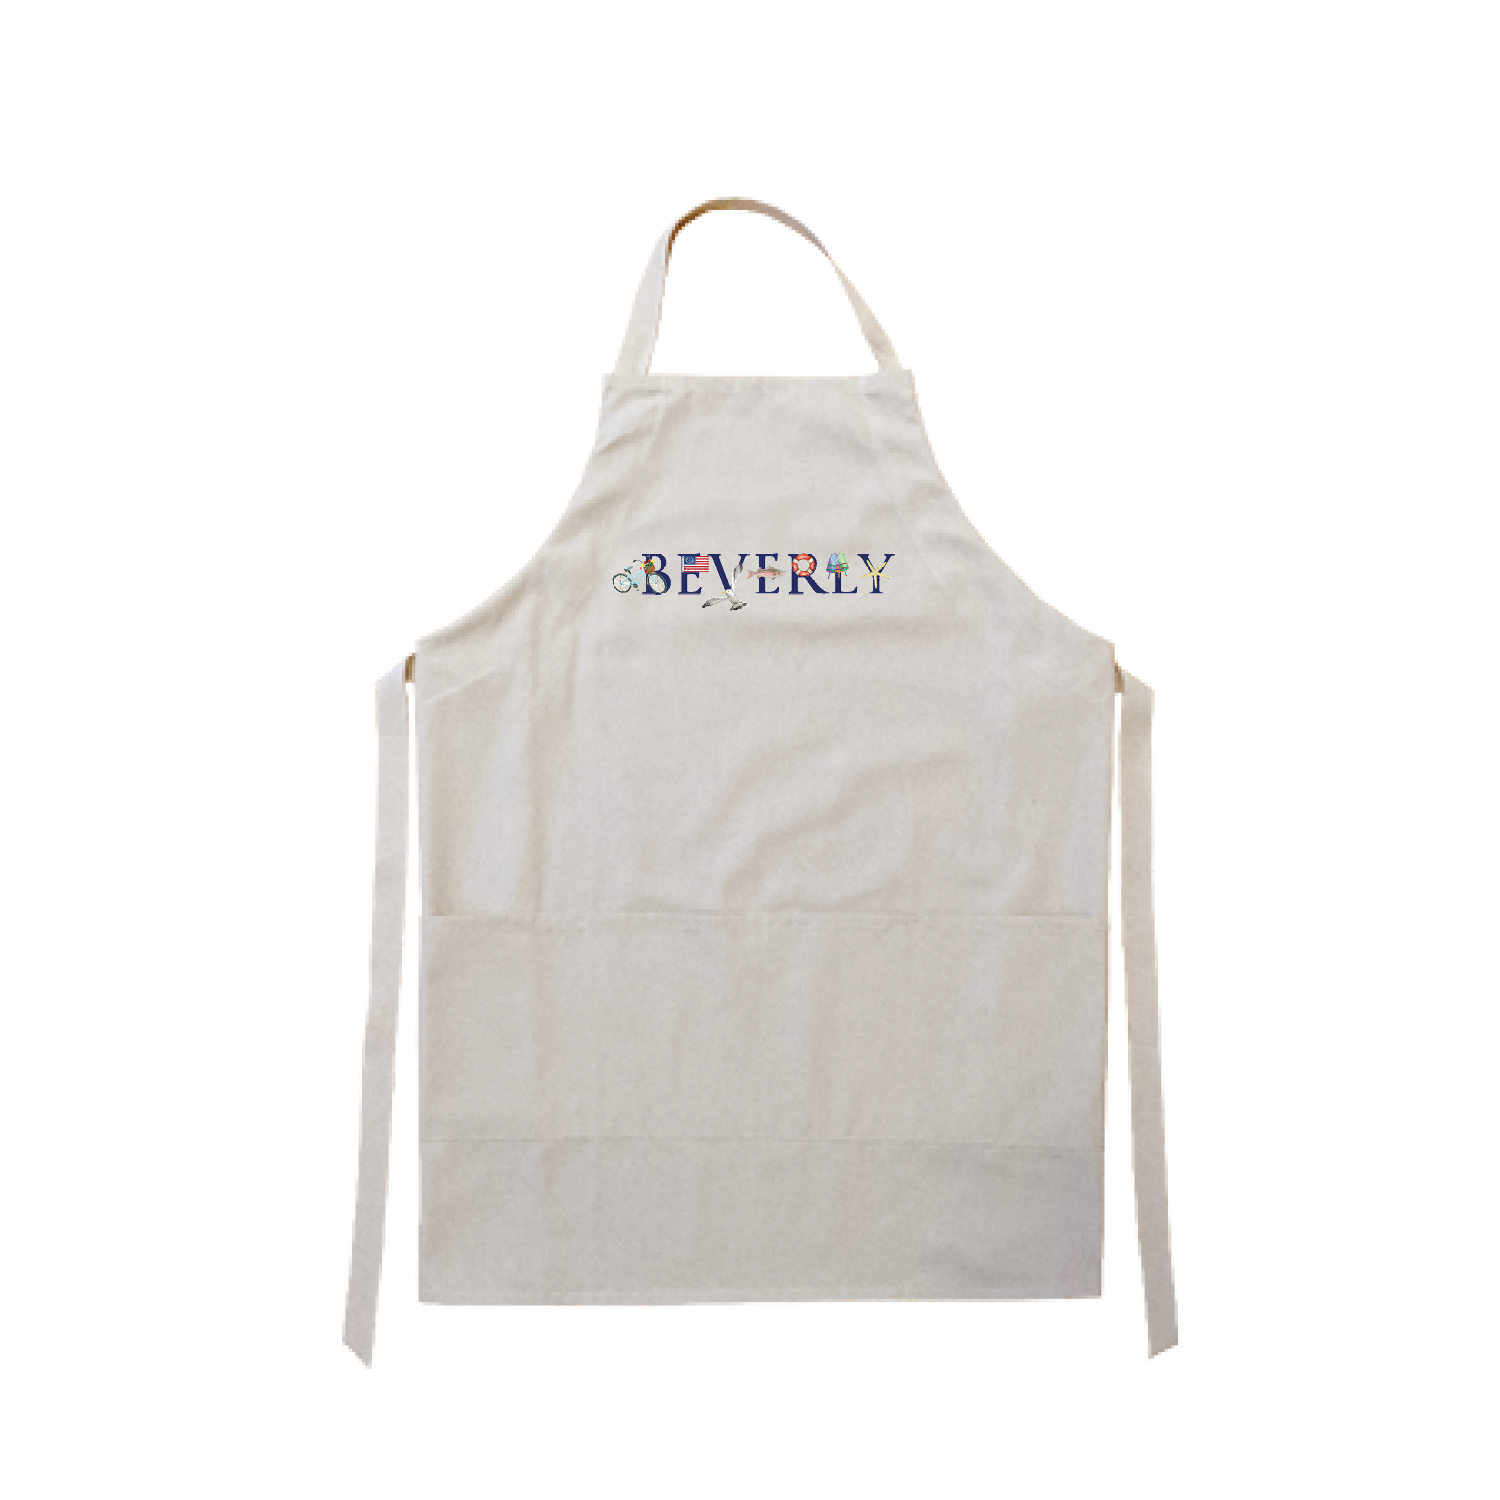 beverly apron